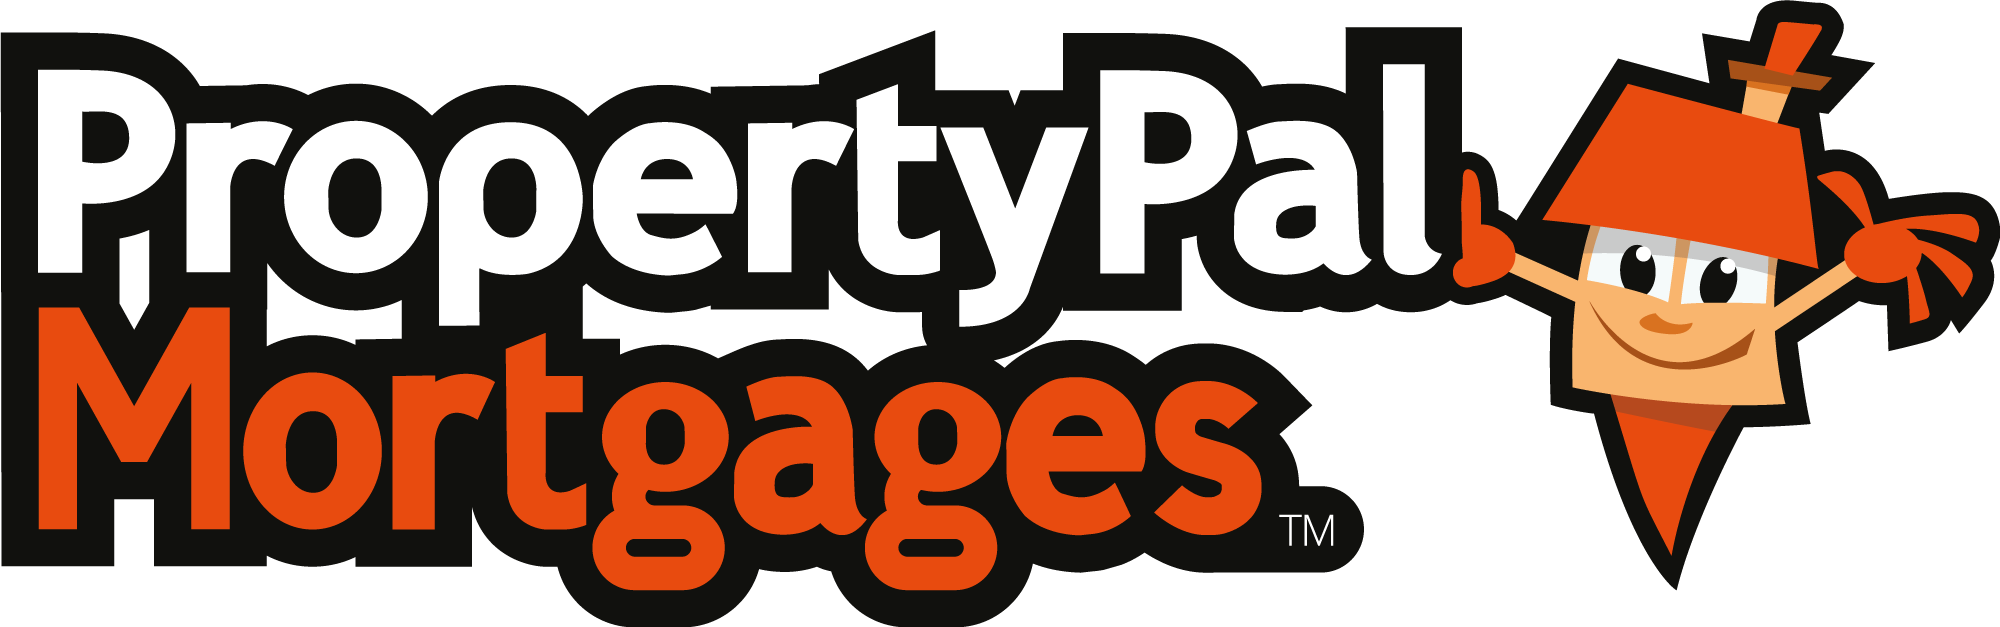 PropertyPal Mortgages logo